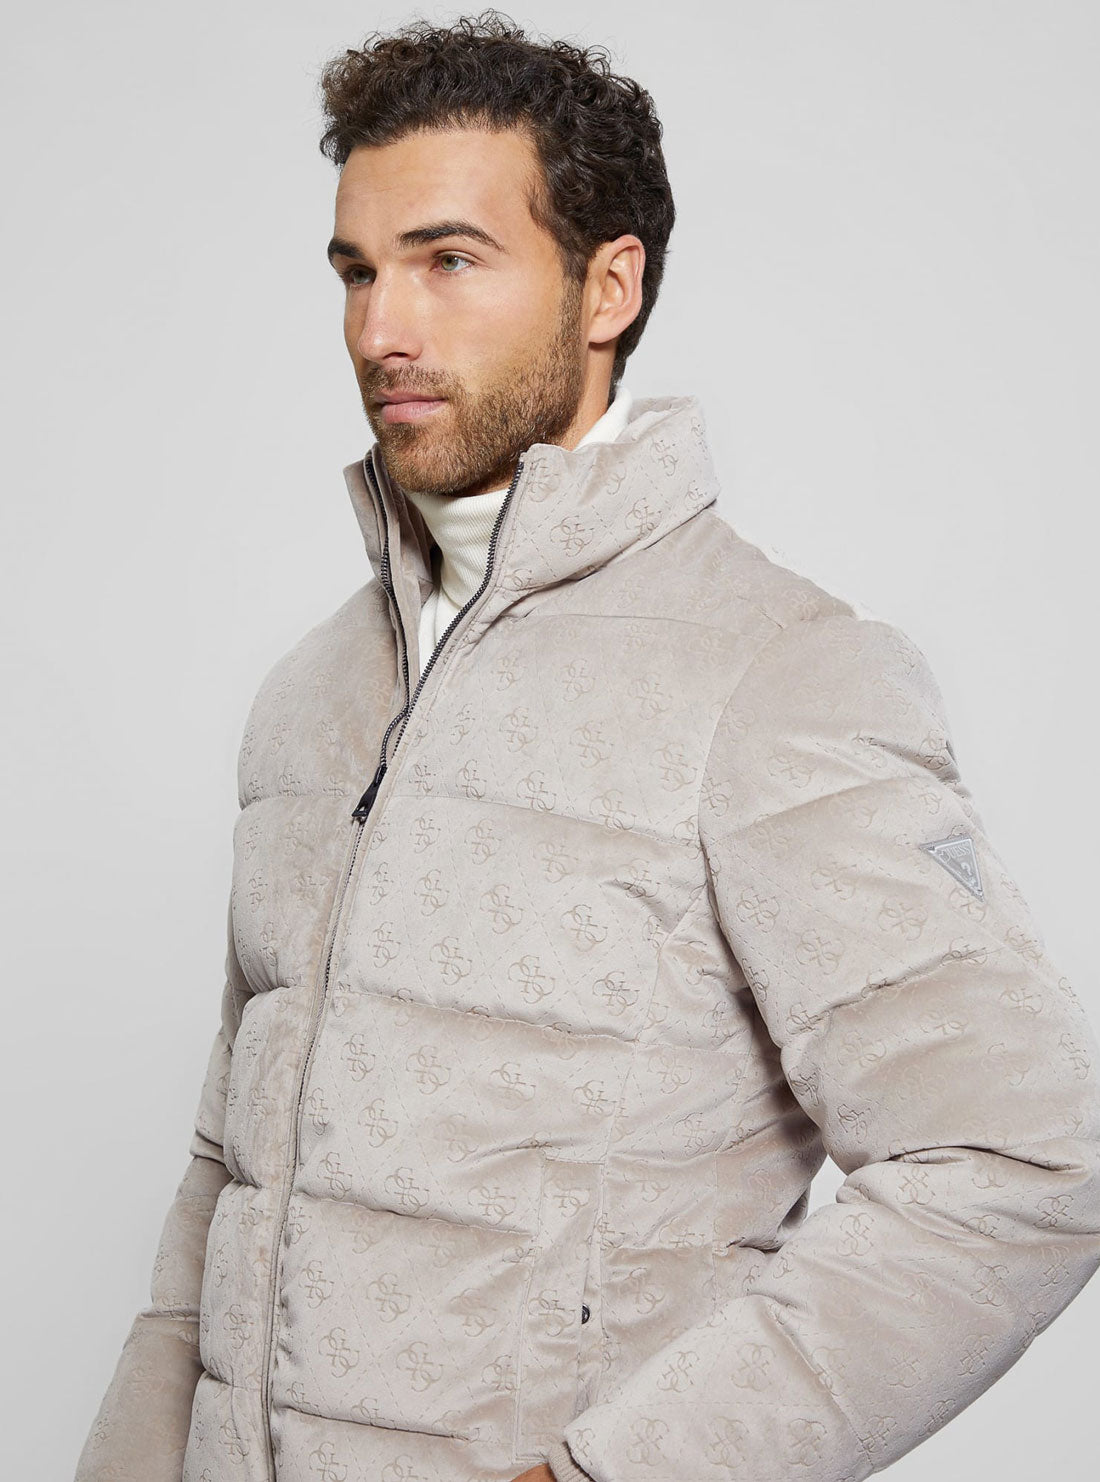 Stone Grey Logo Puffer Jacket | GUESS Men's Apparel | detail view